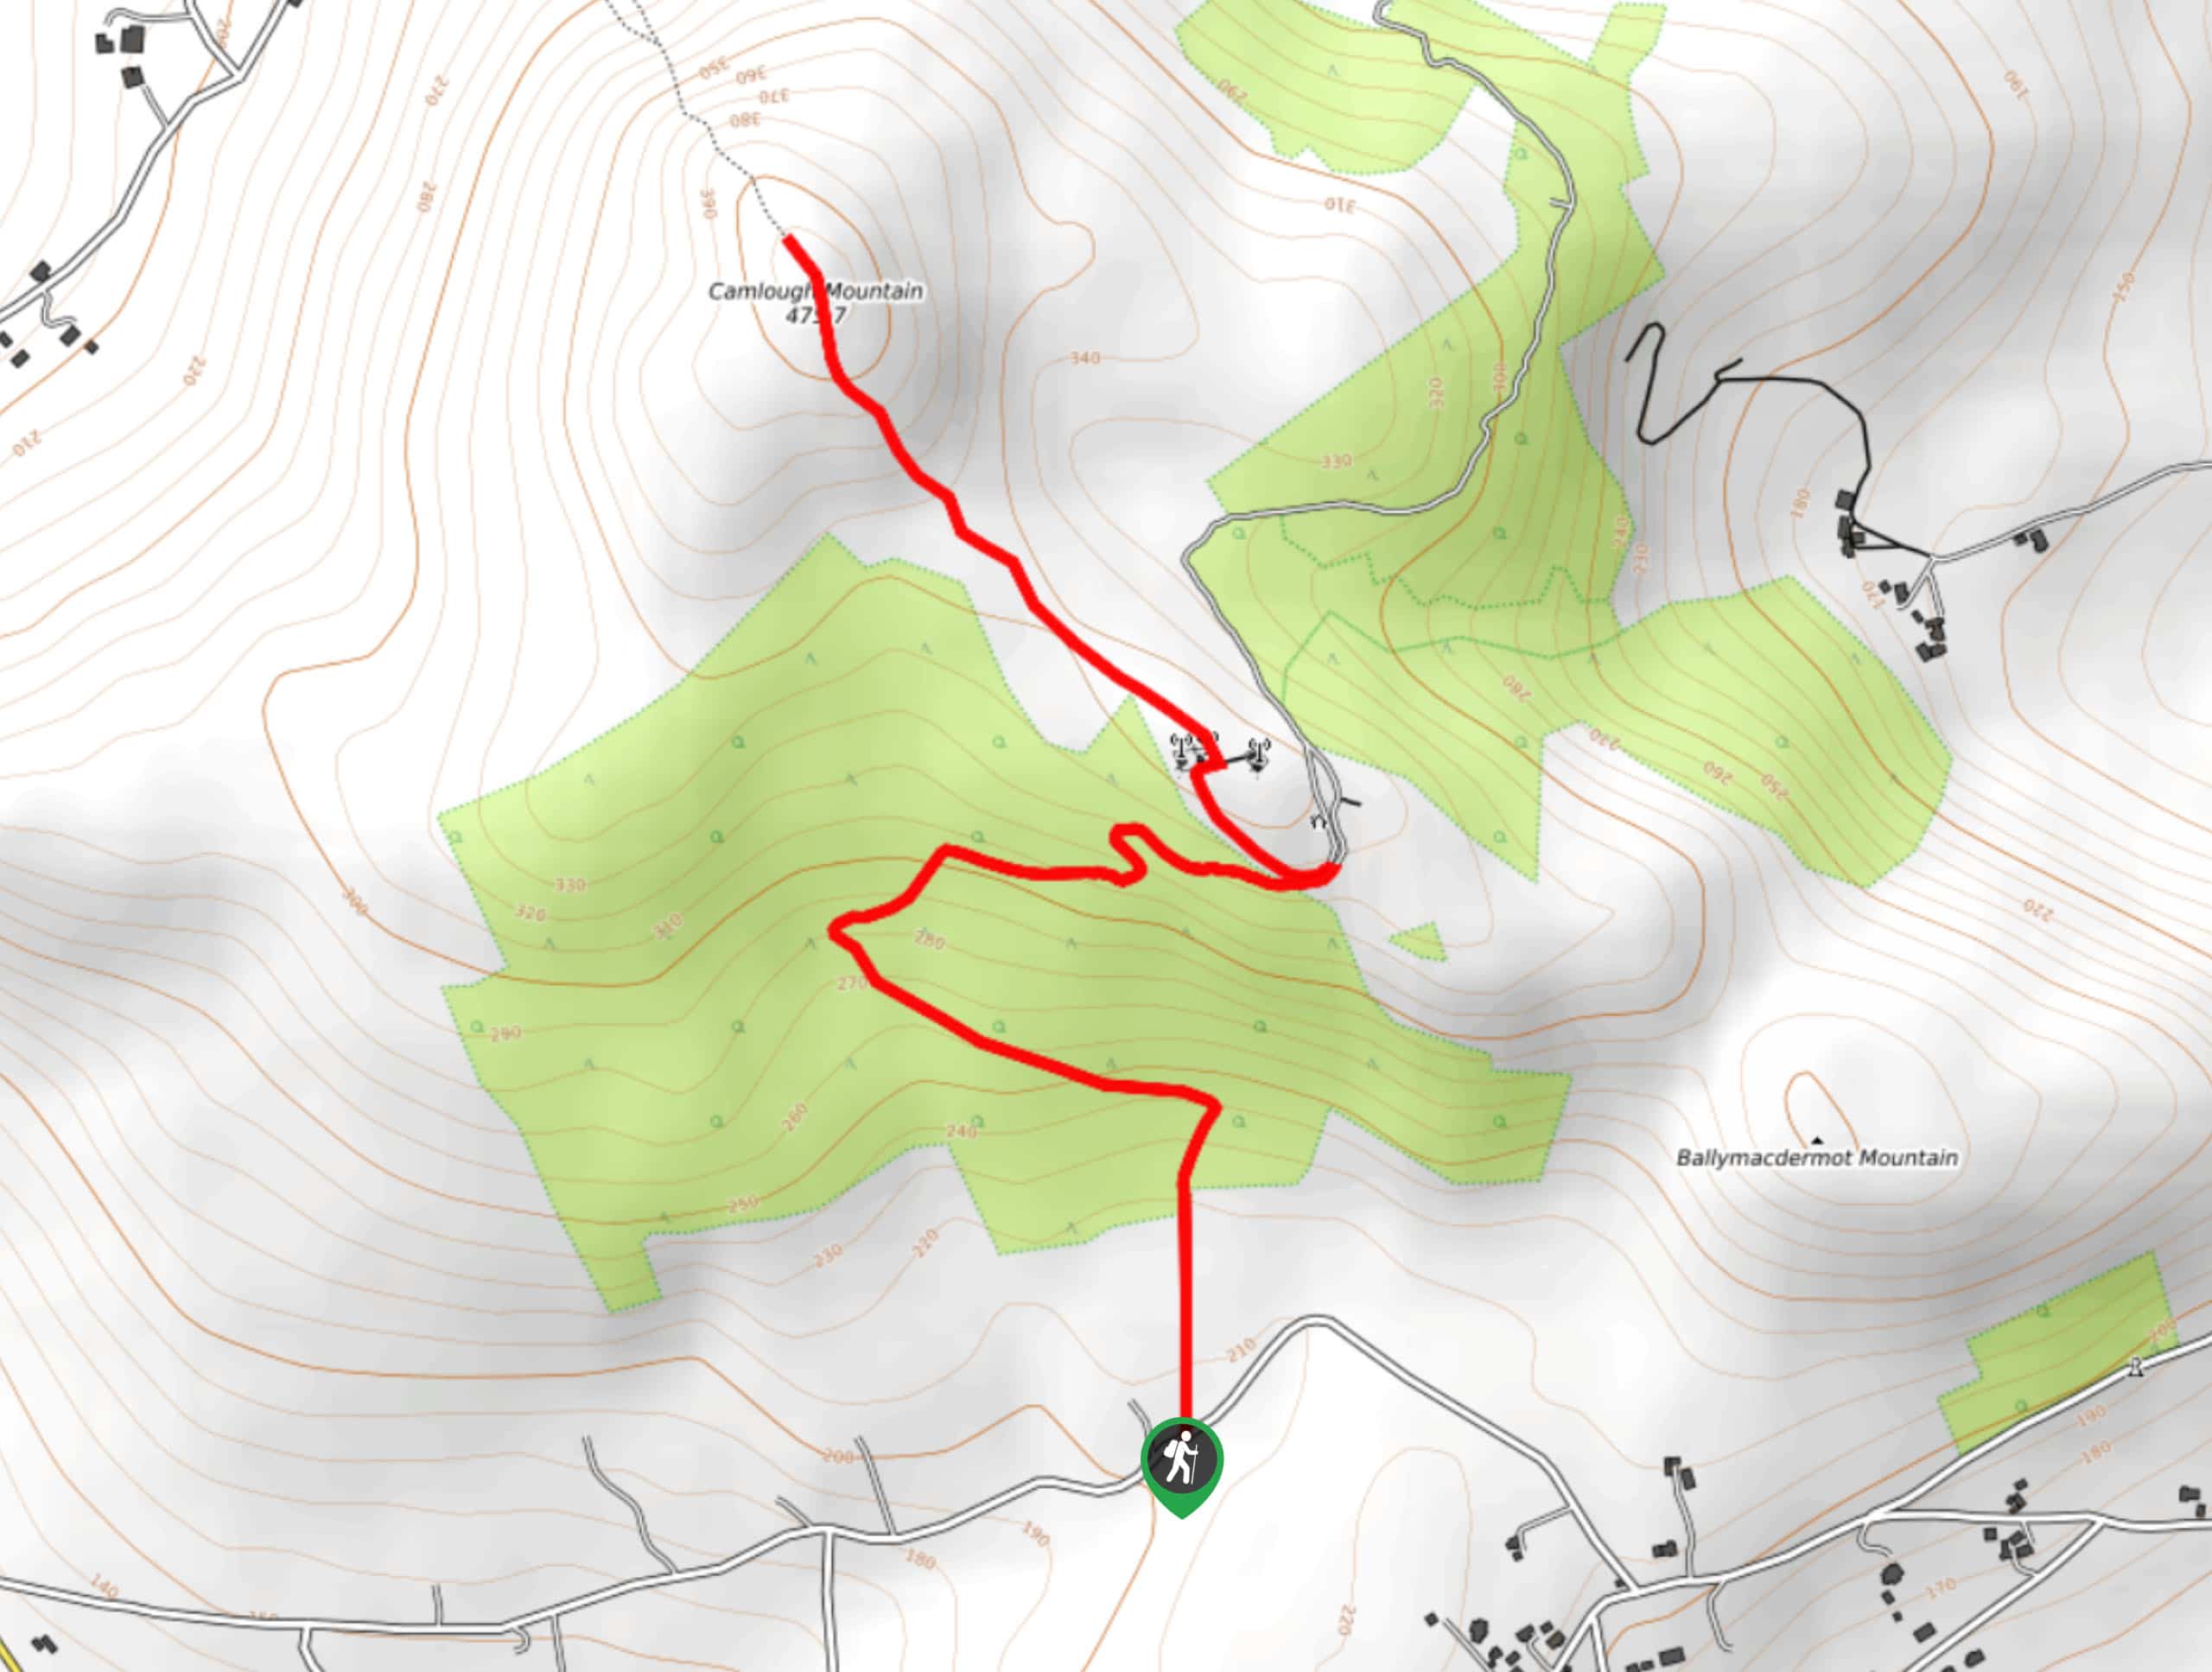 Camlough Mountain Walk Map